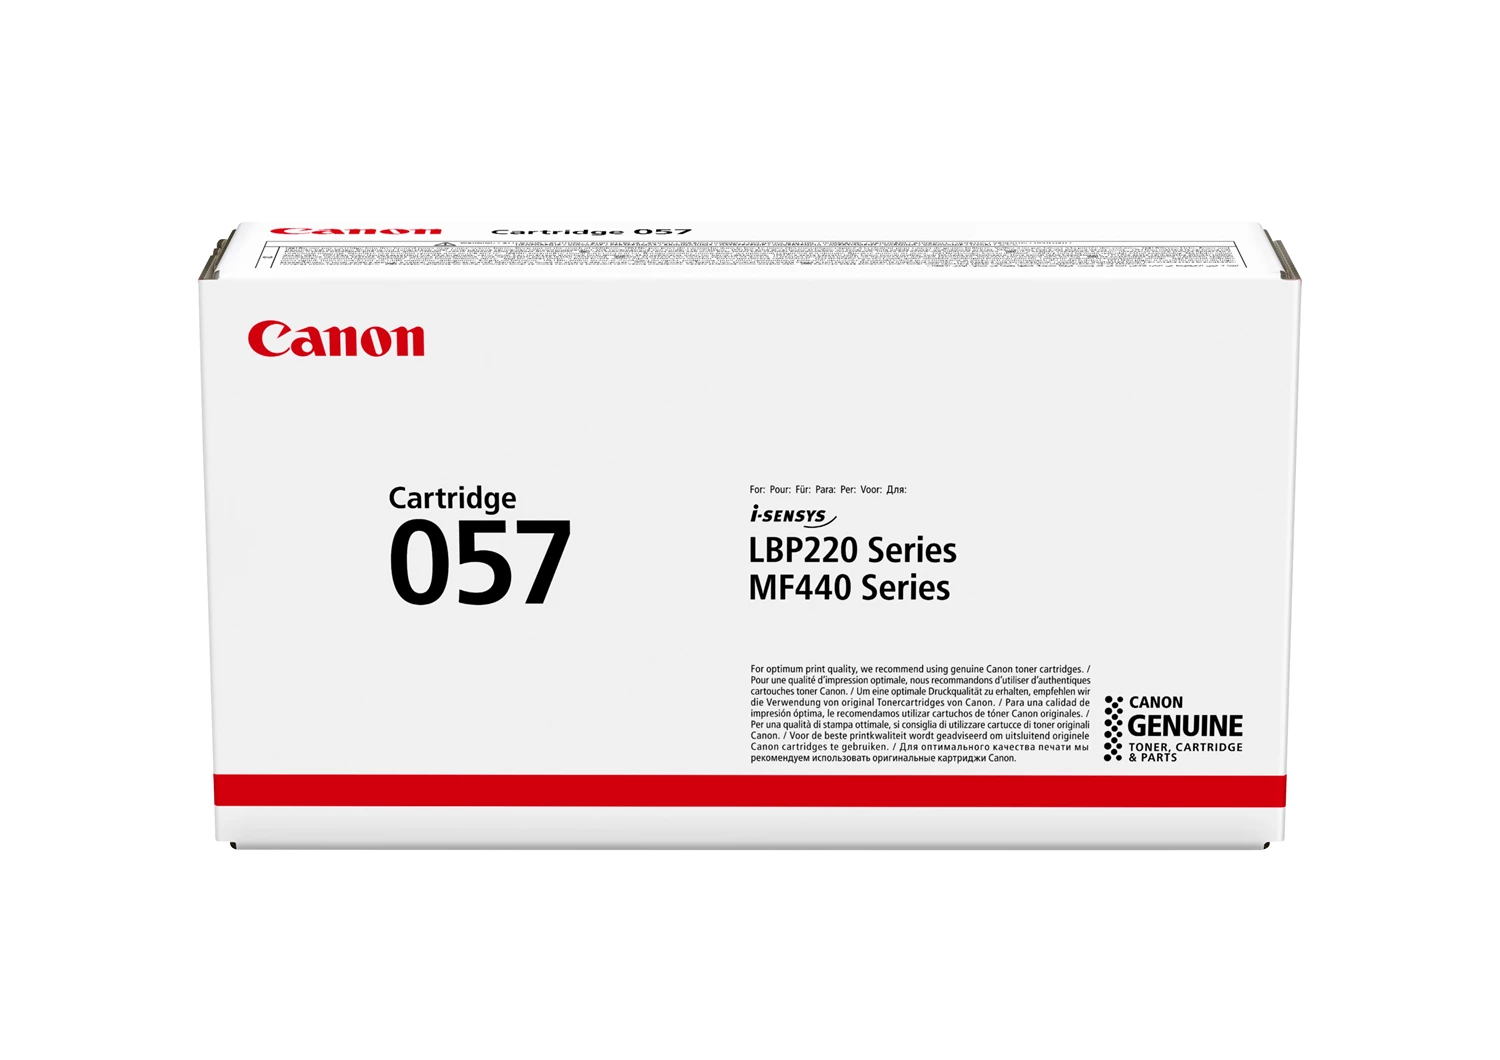 Canon CRG 057 toner cartridge